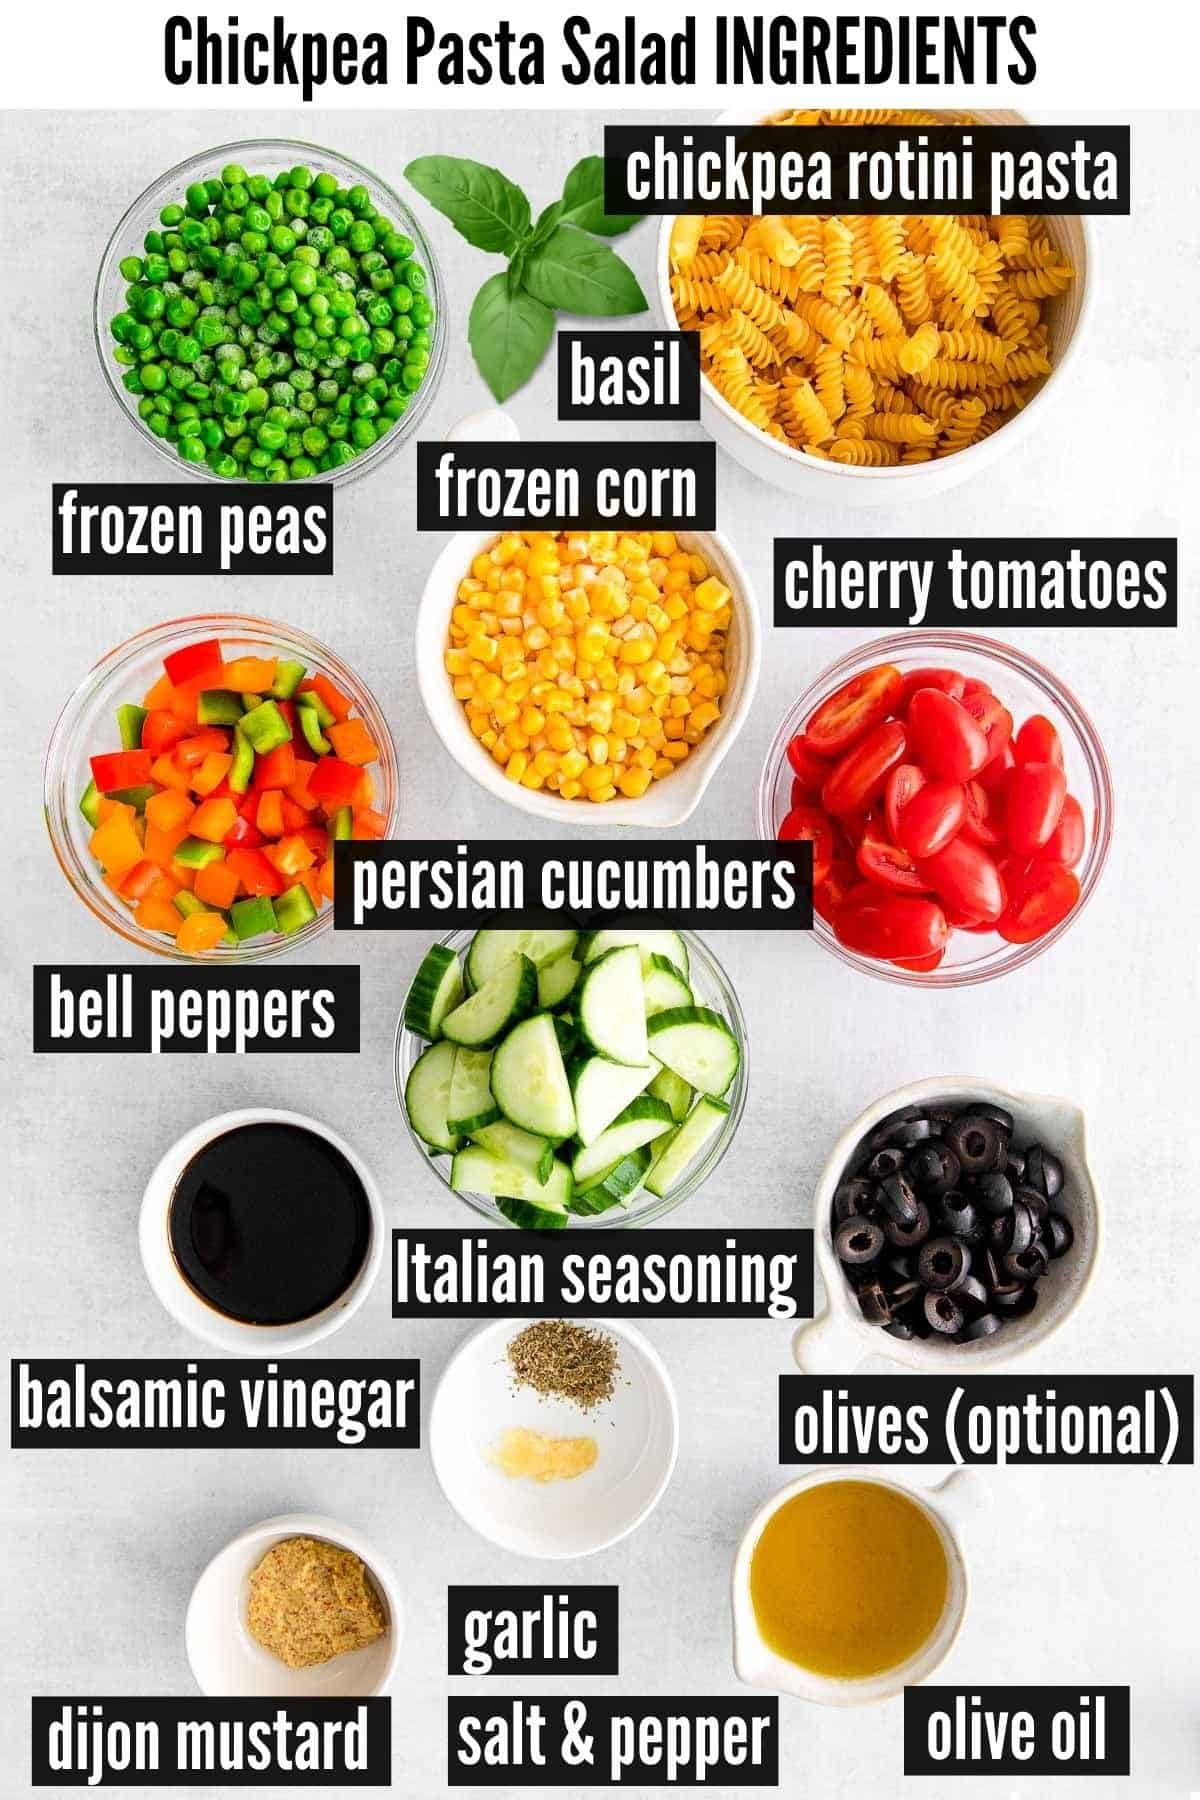 chickpea pasta salad labelled ingredients.